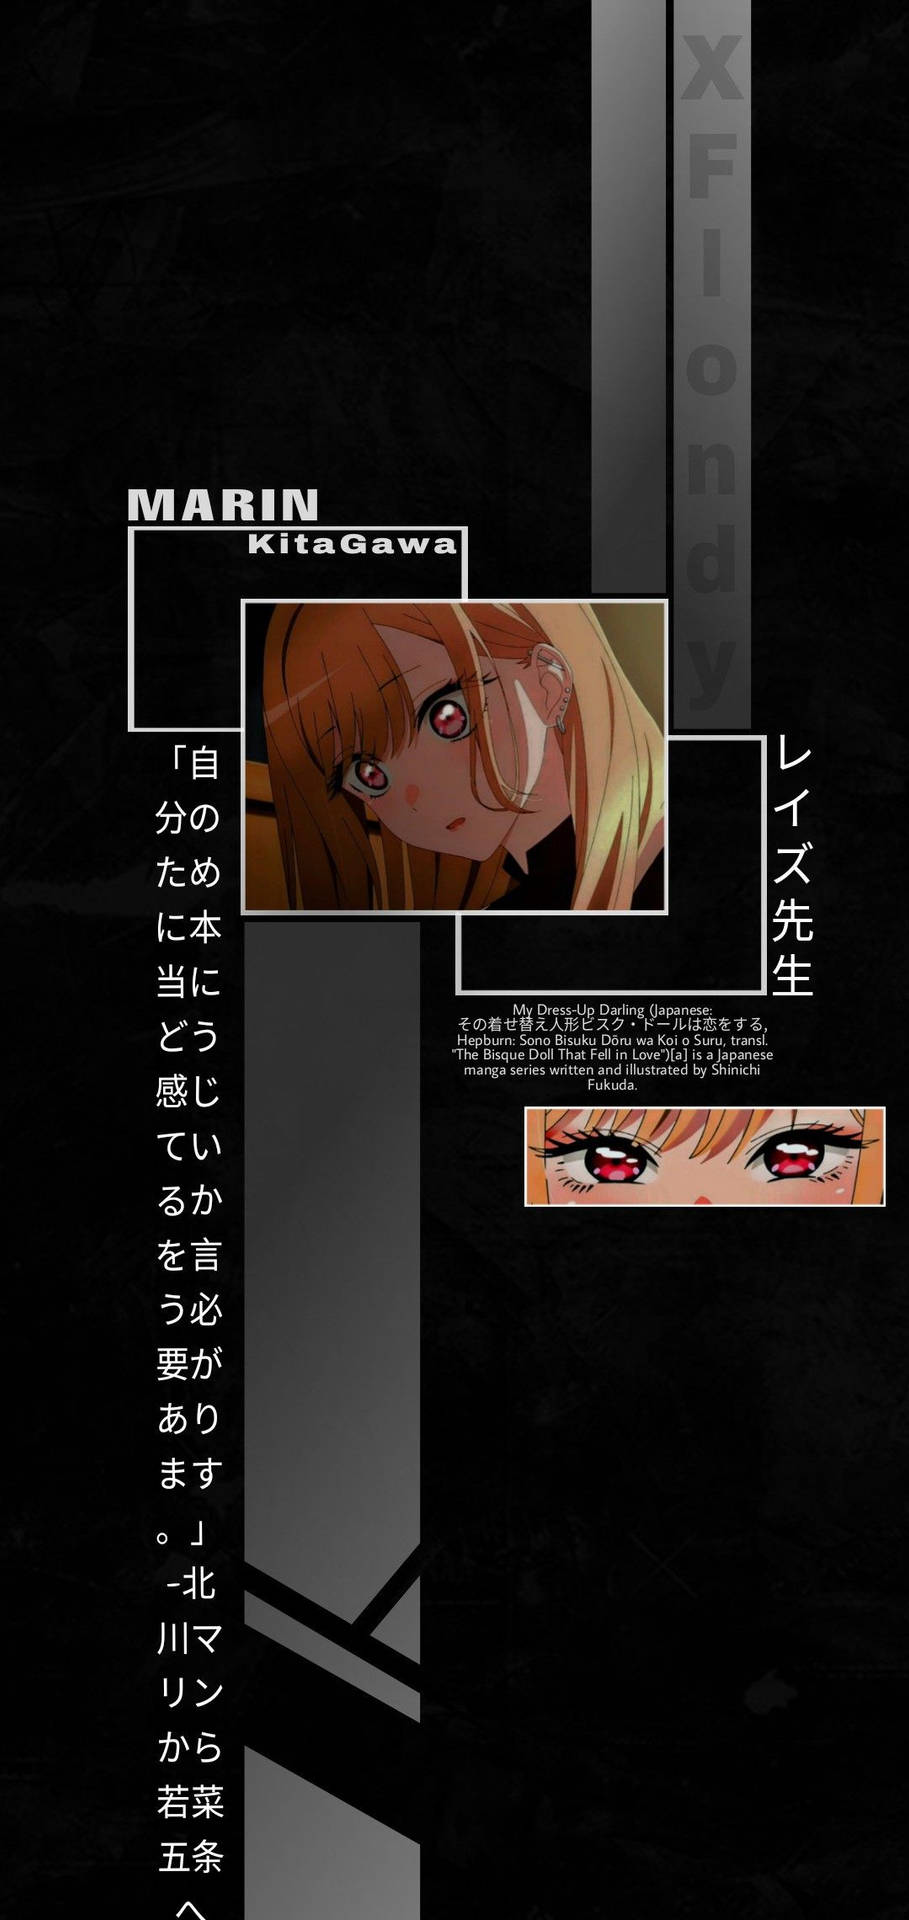 Download Black Aesthetic Anime Marin Kitagawa Wallpaper 